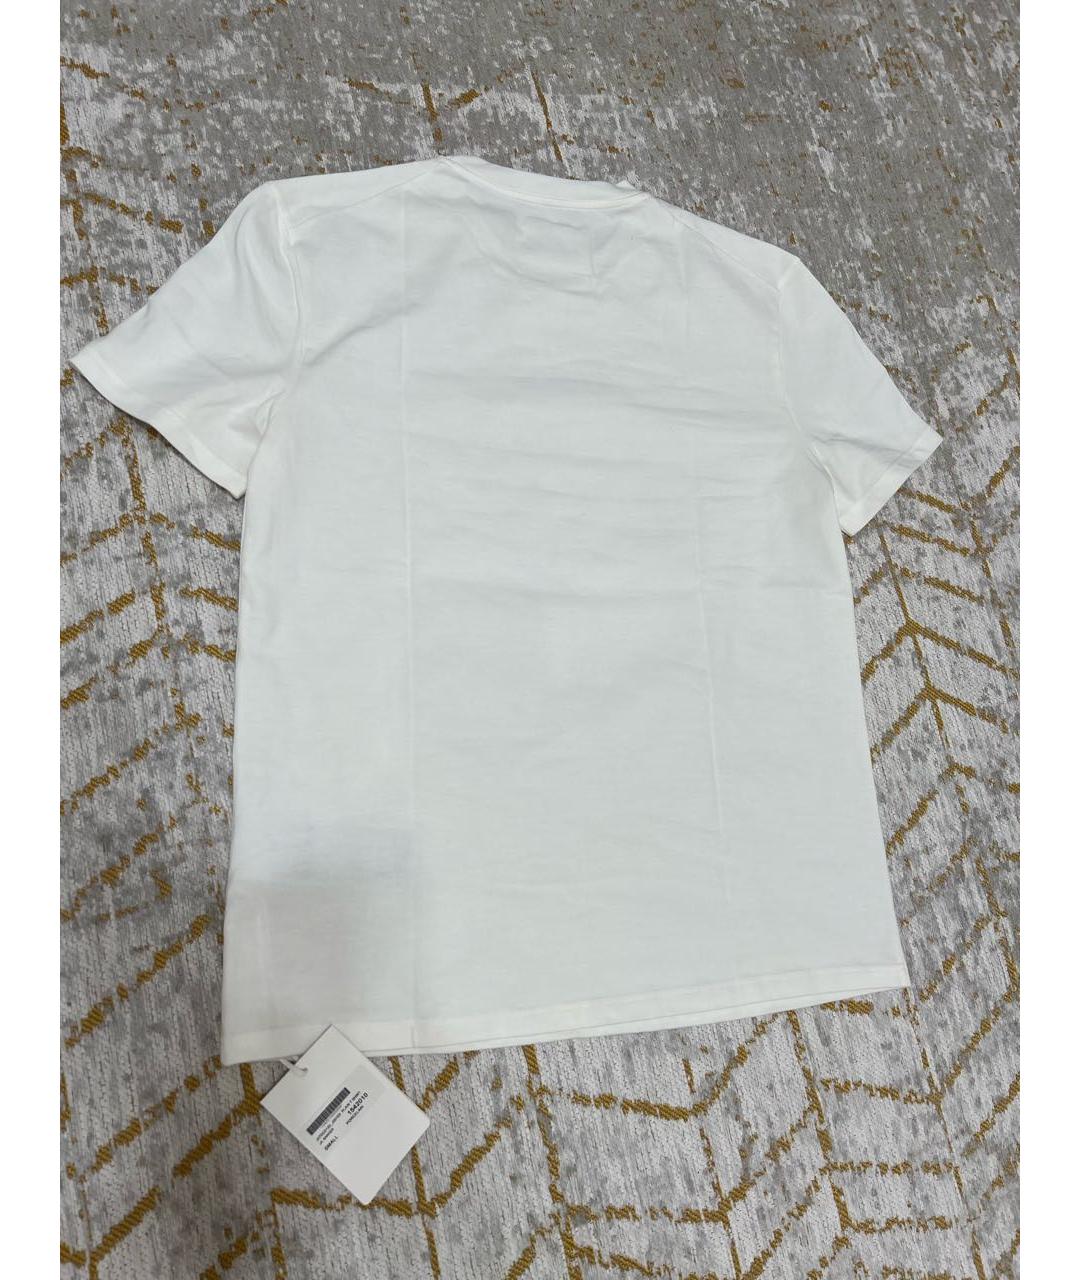 JIL SANDER Белая хлопковая футболка, фото 6